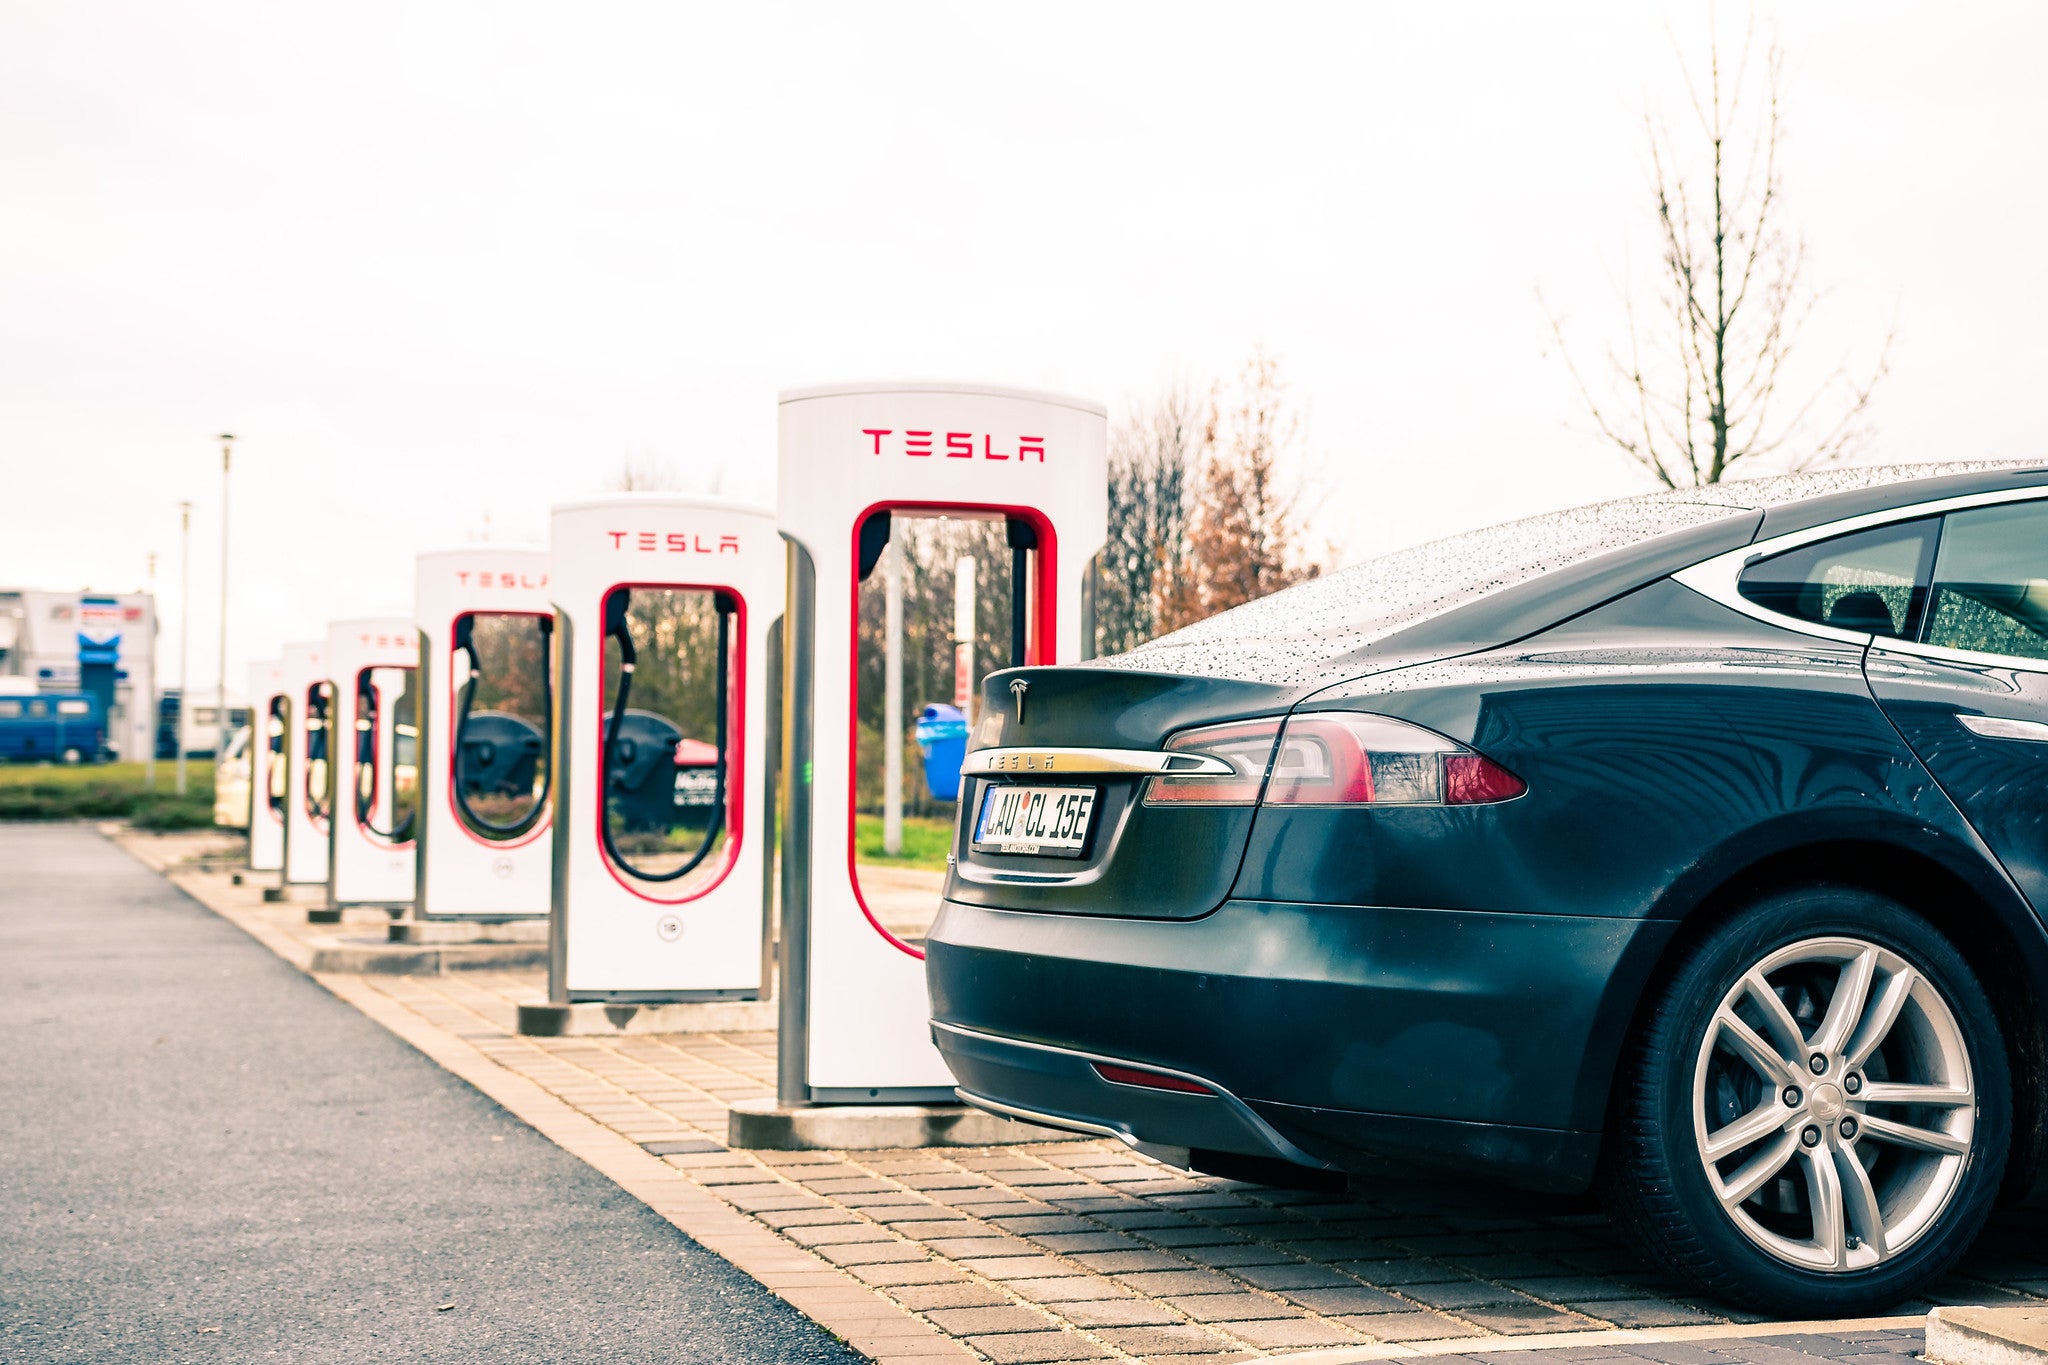 Tesla-Supercharger-Maxwell-Technologies-Lithium-batteries